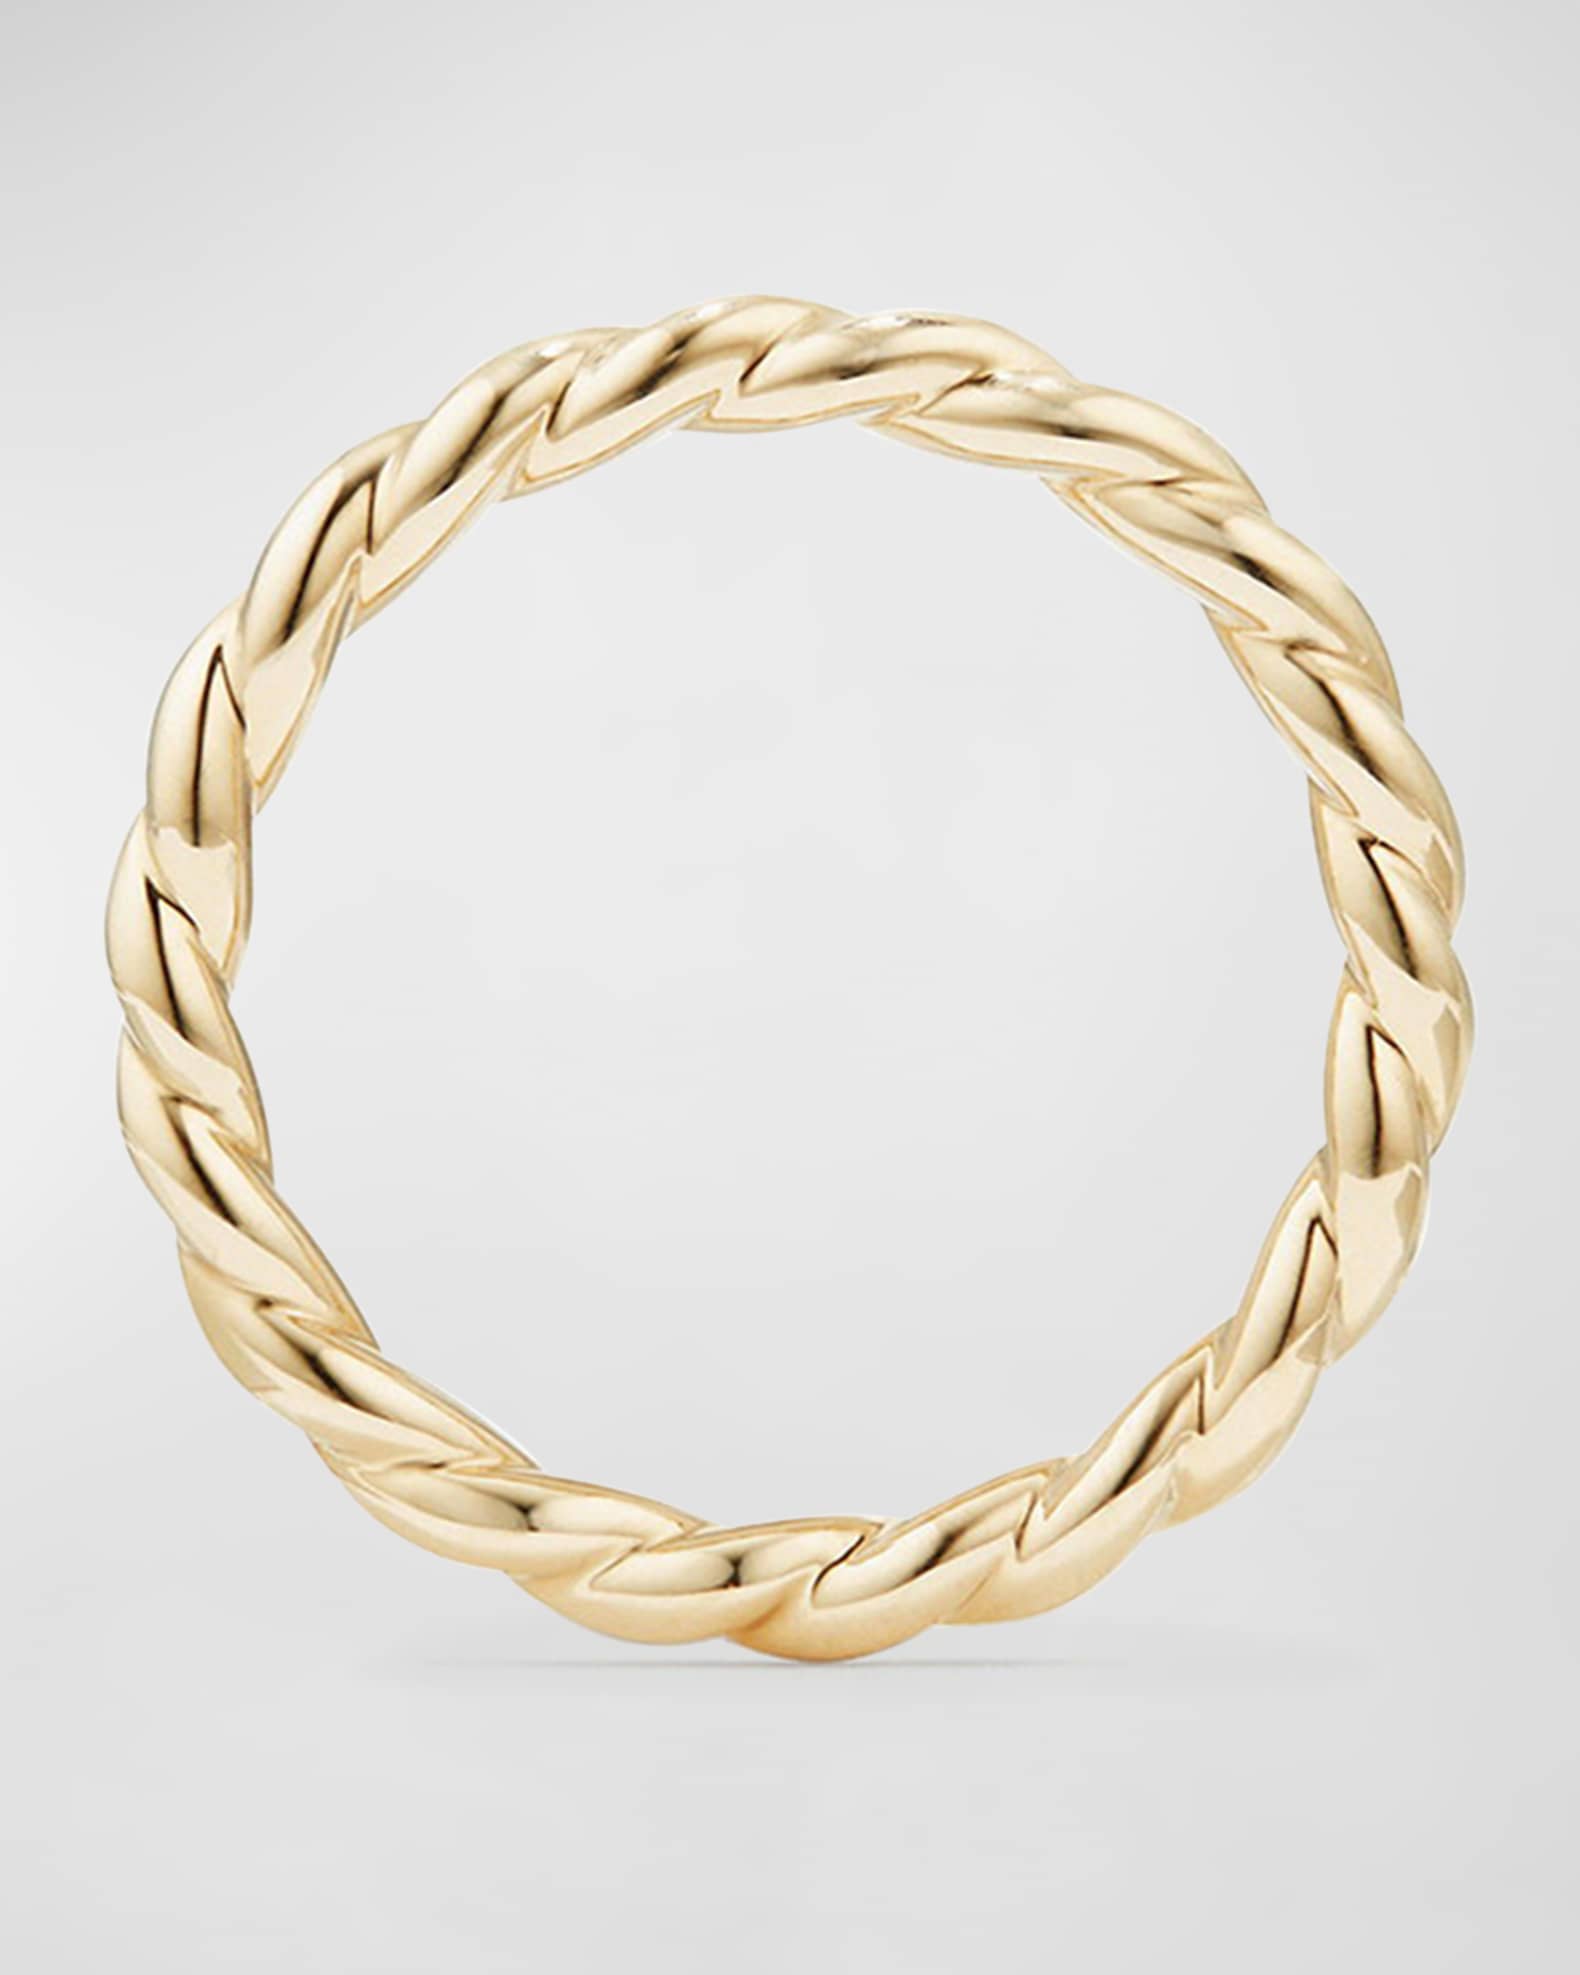 David Yurman Paveflex 2.7mm Band Ring in 18K Gold, Size 7 | Neiman Marcus